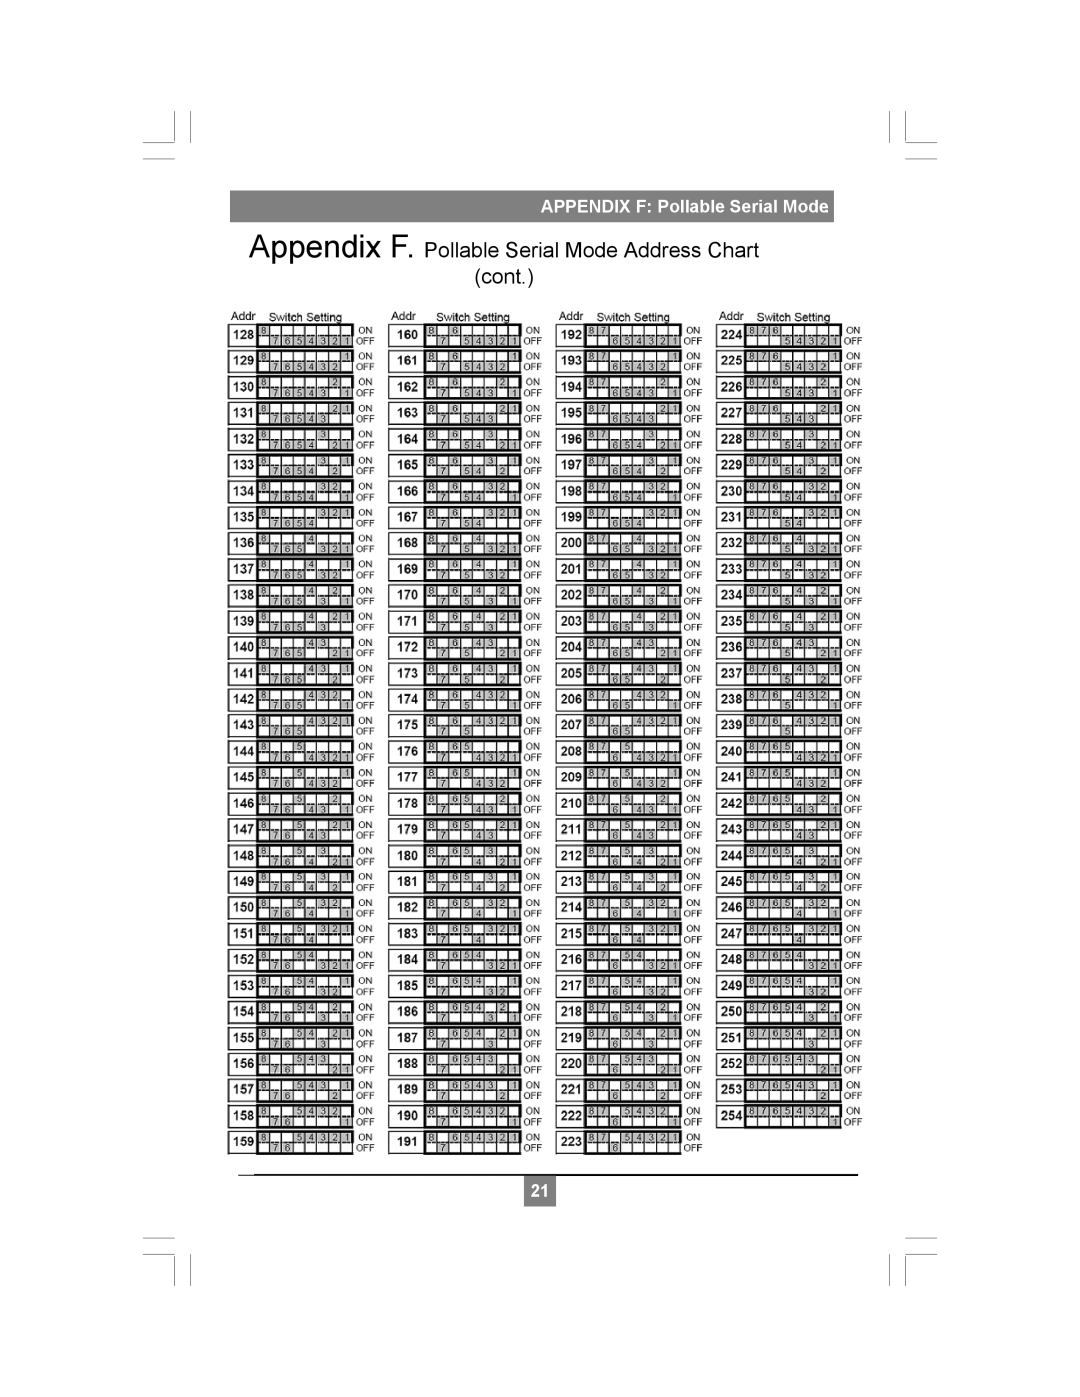 Magenta XR2000 setup guide cont, Appendix F. Pollable Serial Mode Address Chart, APPENDIX F Pollable Serial Mode 